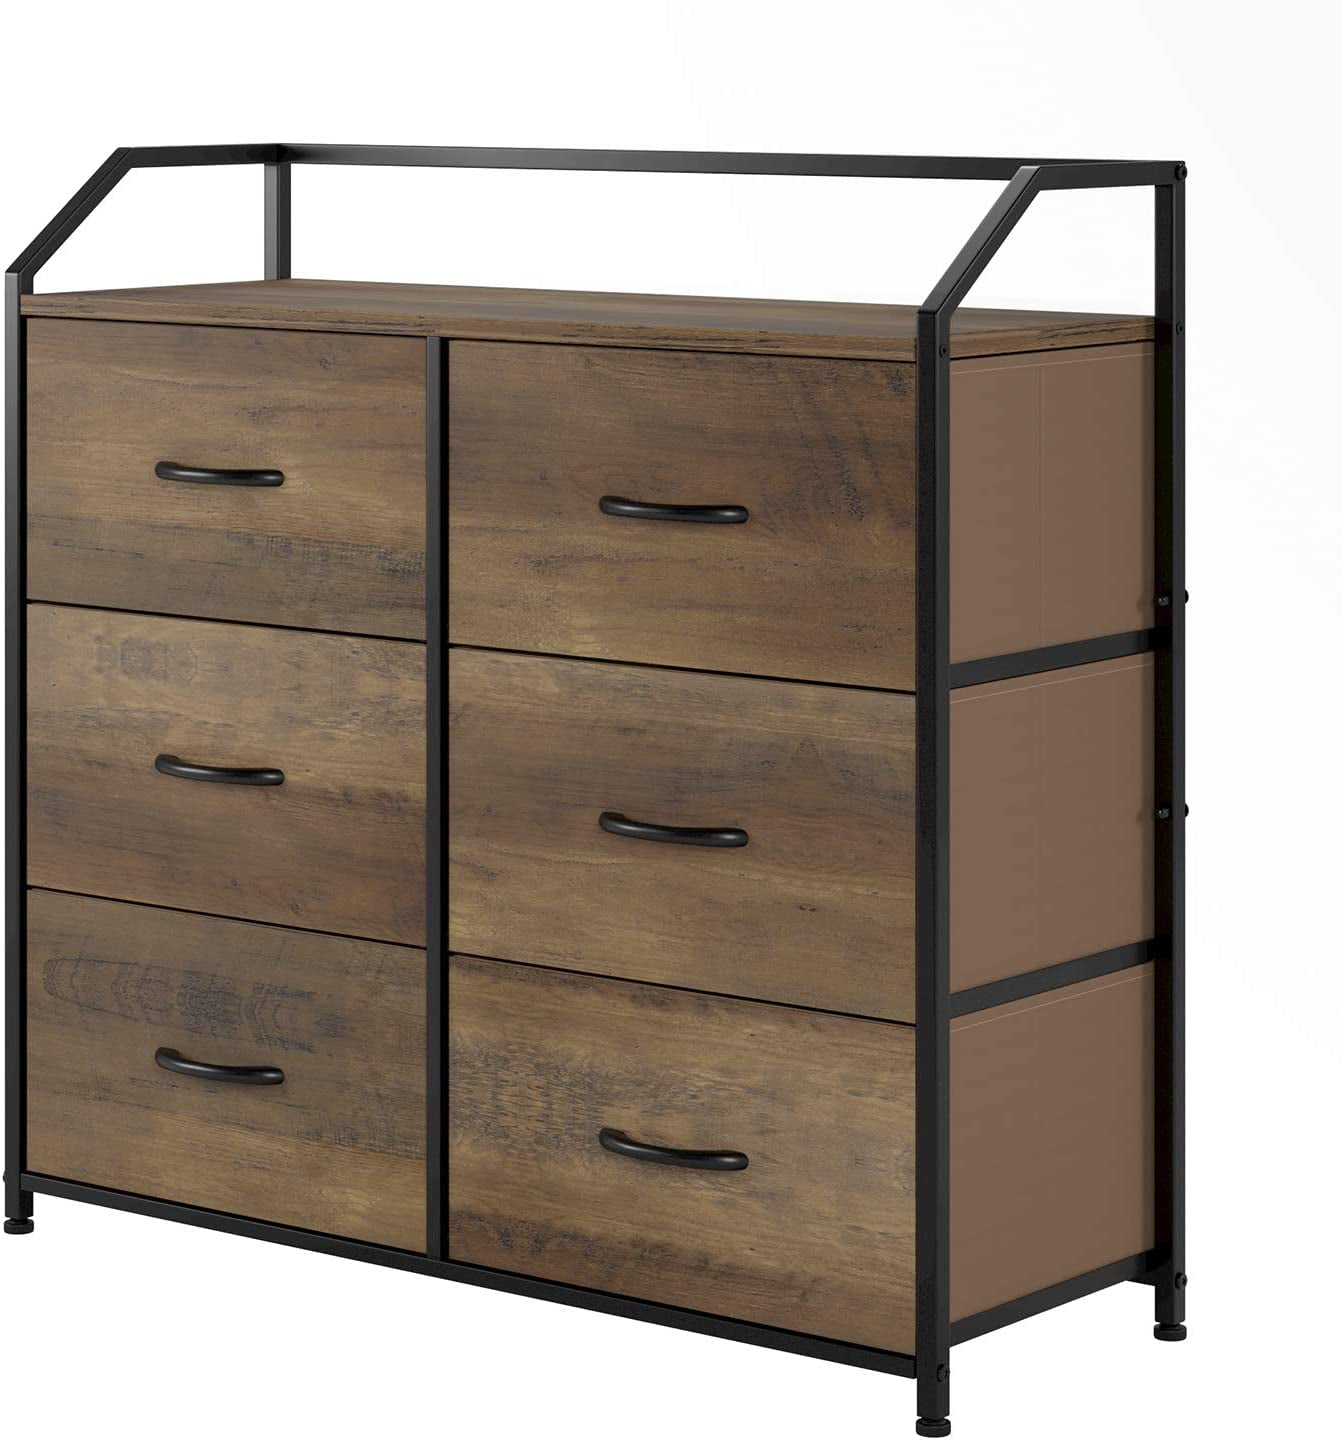 Details about   Dark Brown Wooden 4 Drawer Chest of Drawers Dresser Clothes Storage Bedroom 